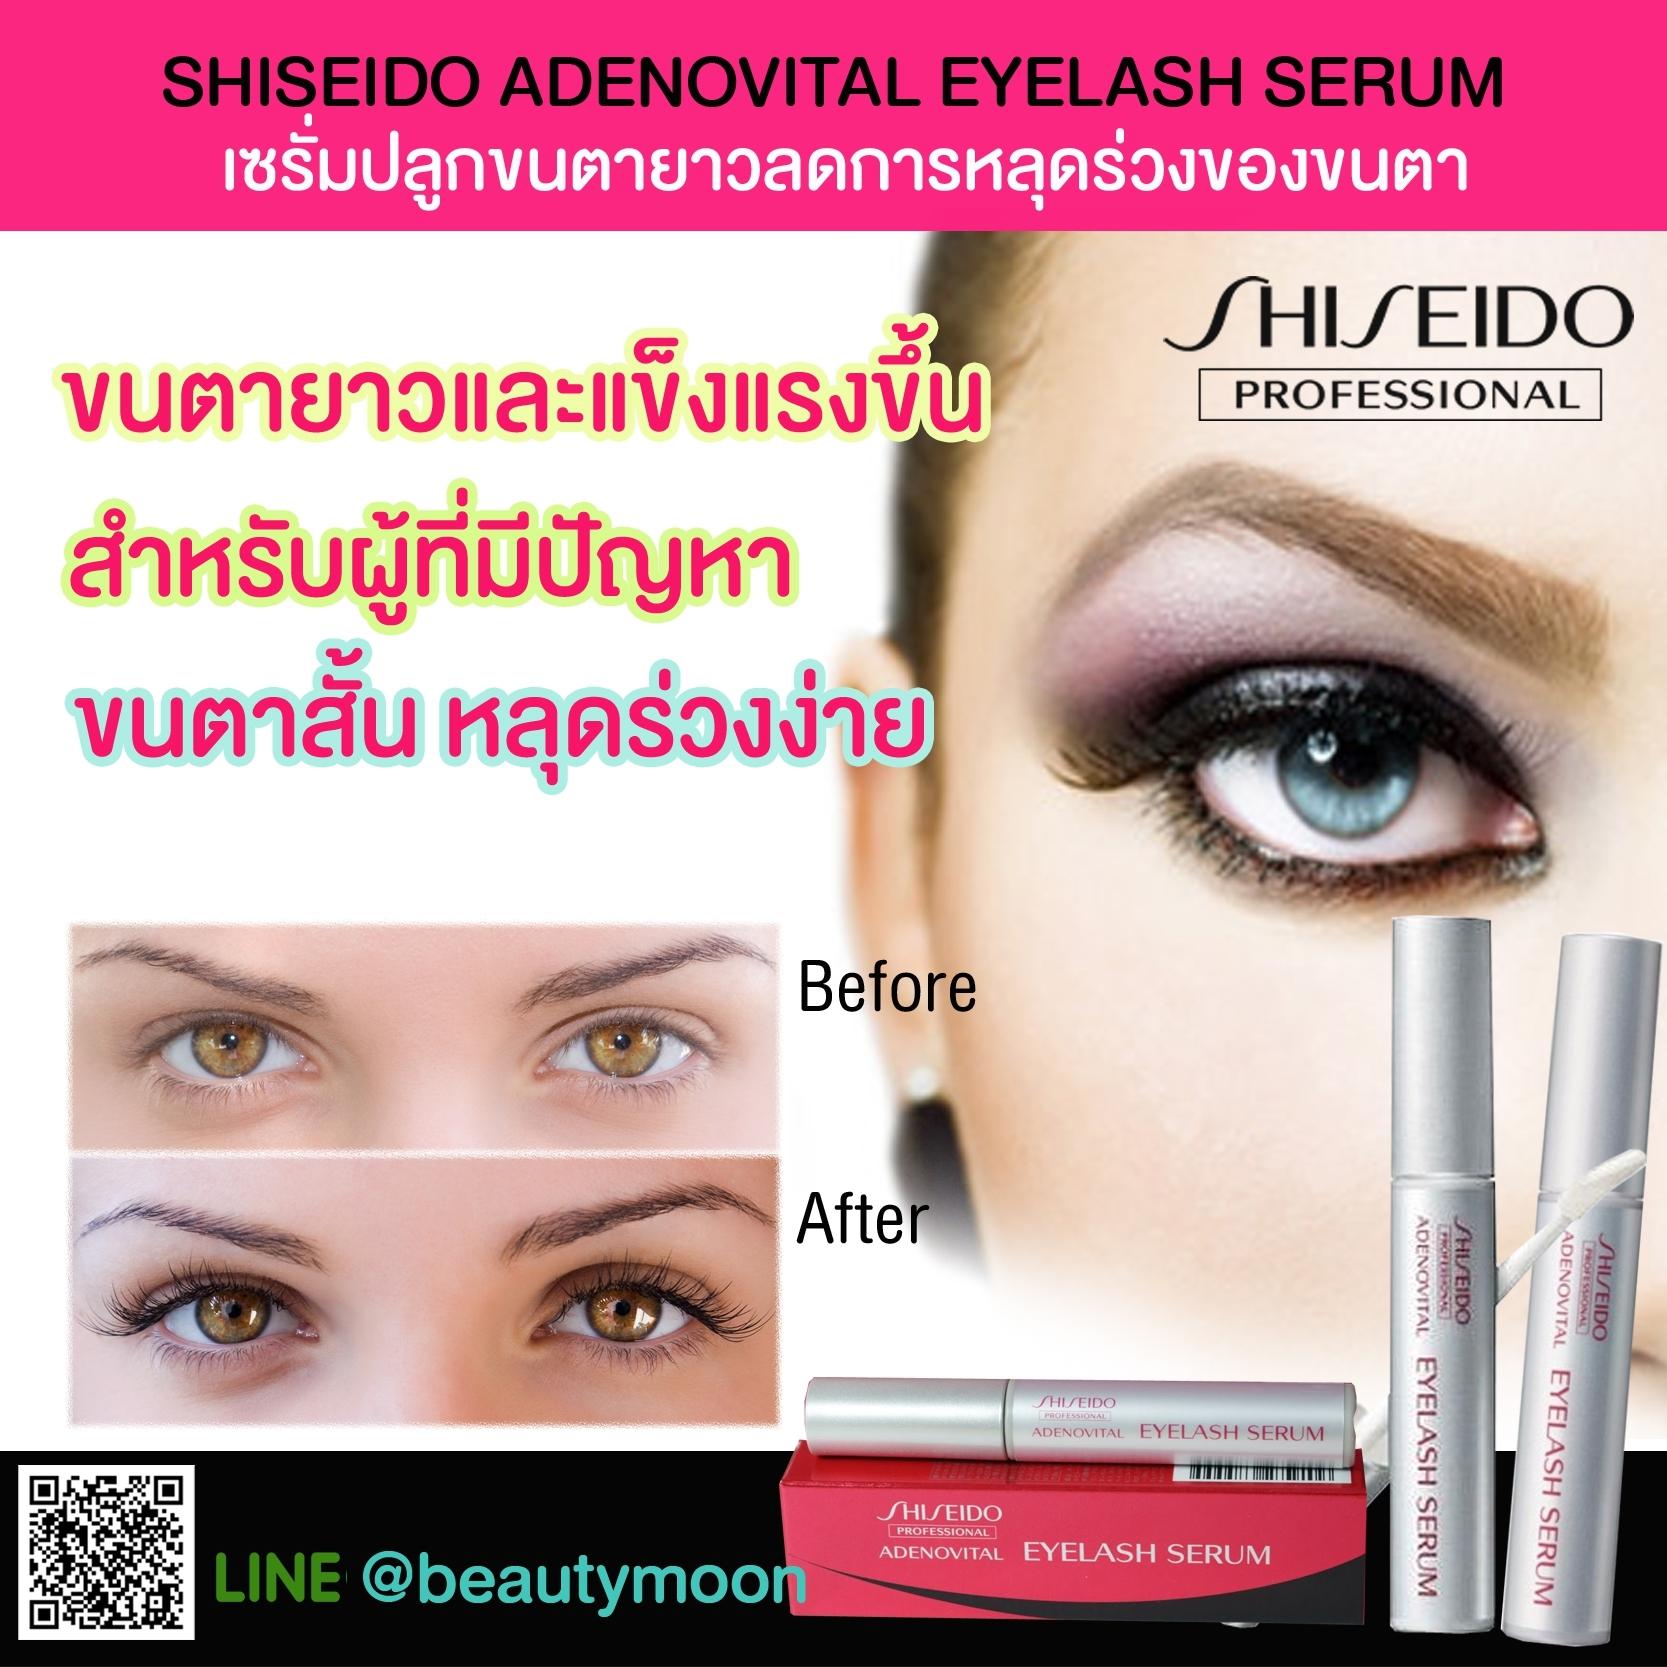 Shiseido ADENOVITAL EYELASH SERUM เซรั่มปลูกขนตายาวลดการหลุดร่วงของขนตา 1 เดือนพิสูจน์ได้ว่าขนตายาวและหนาขึ้นจริง เหมาะสำหรับผู้ที่ชอบติดขนตาปลอมบ่อยๆ เนื่องจากเวลาดึงขนตาออกขนตาจะหลุดออกมาด้วยค่ะ